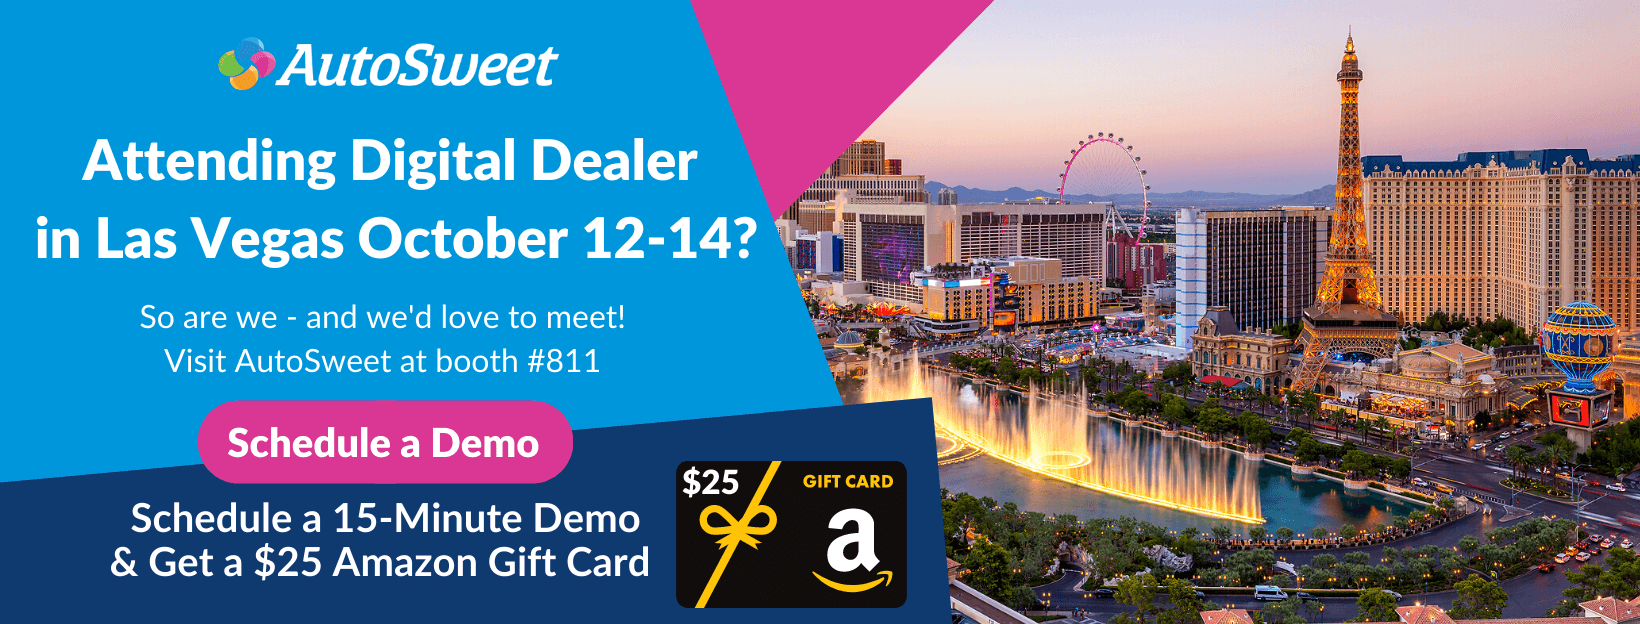 We'll See You in Las Vegas at Digital Dealer AutoSweet